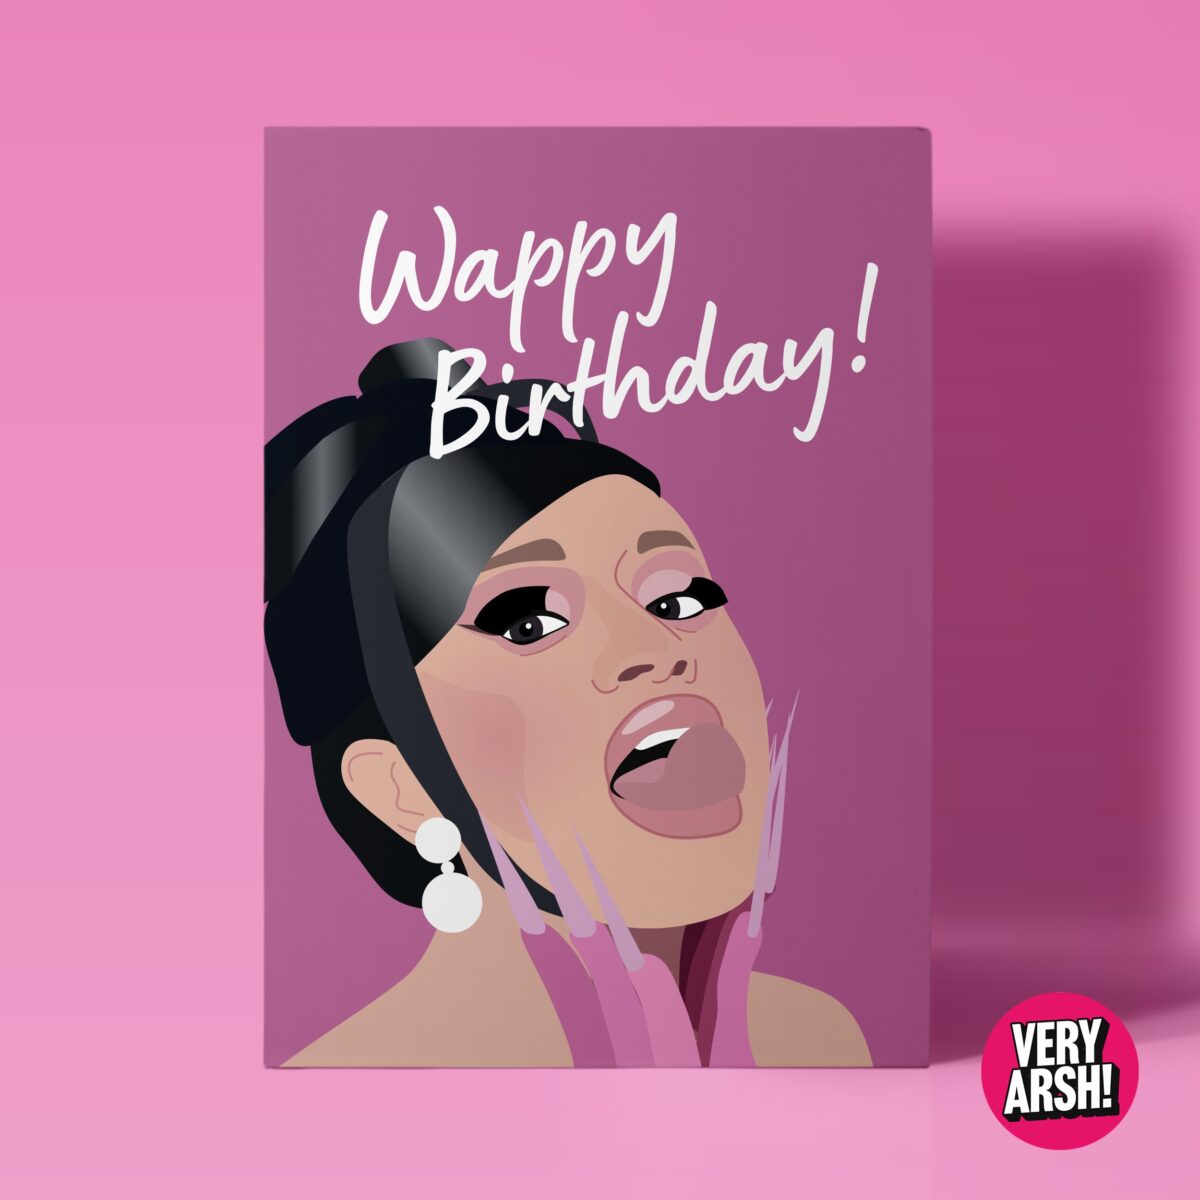 Wappy Birthday - Cardi B inspired Birthday Card